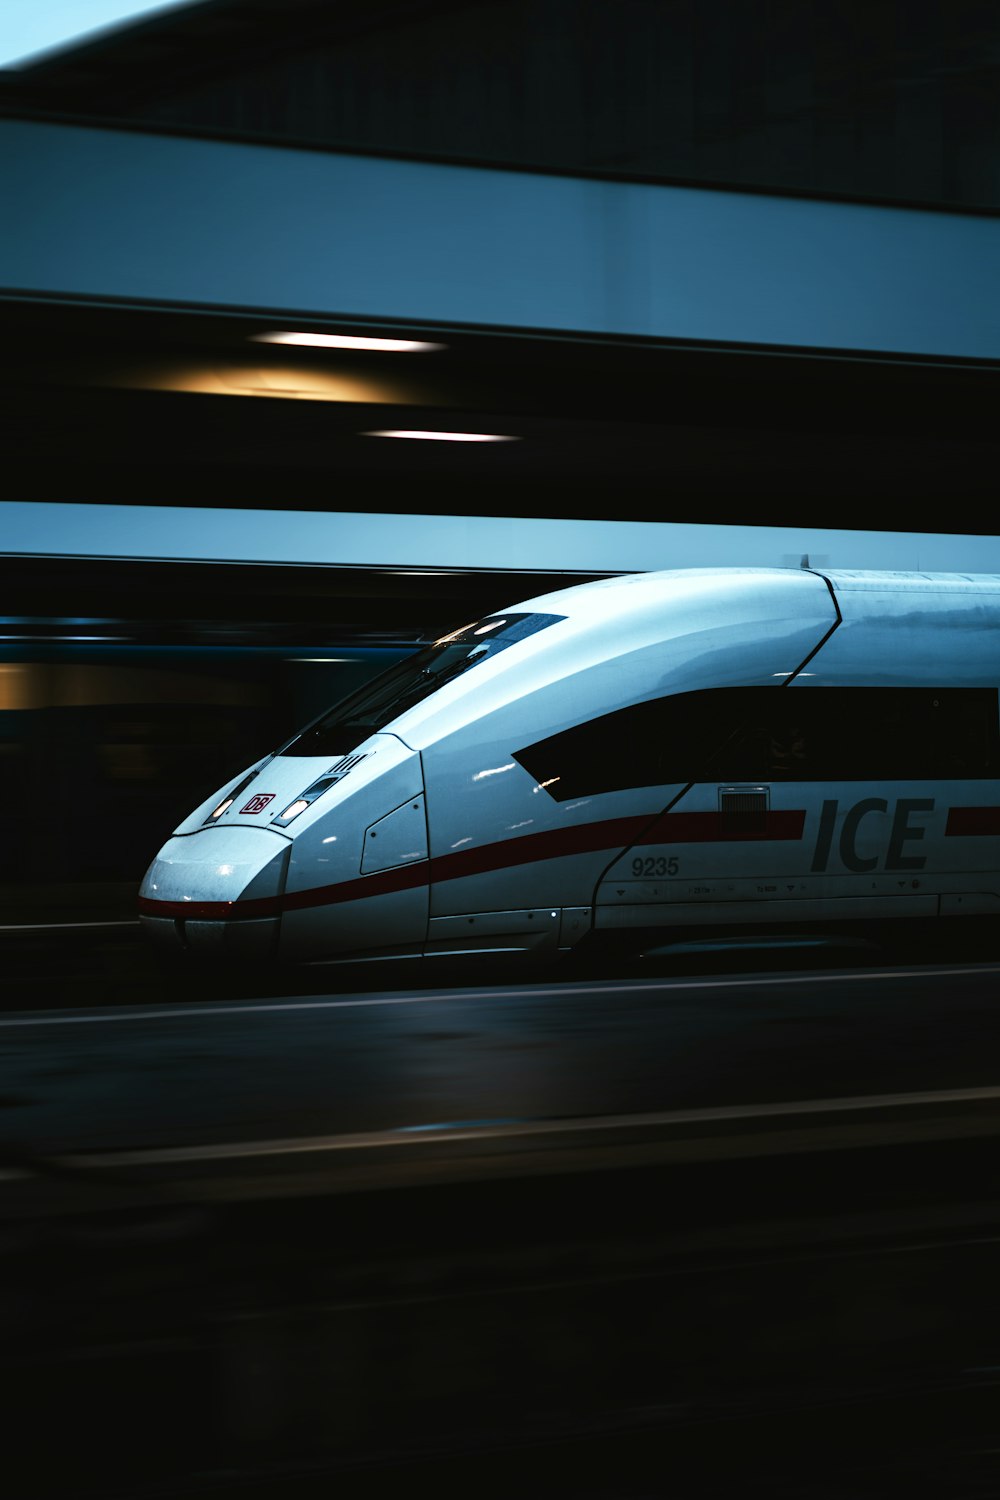 a high speed train traveling through a train station